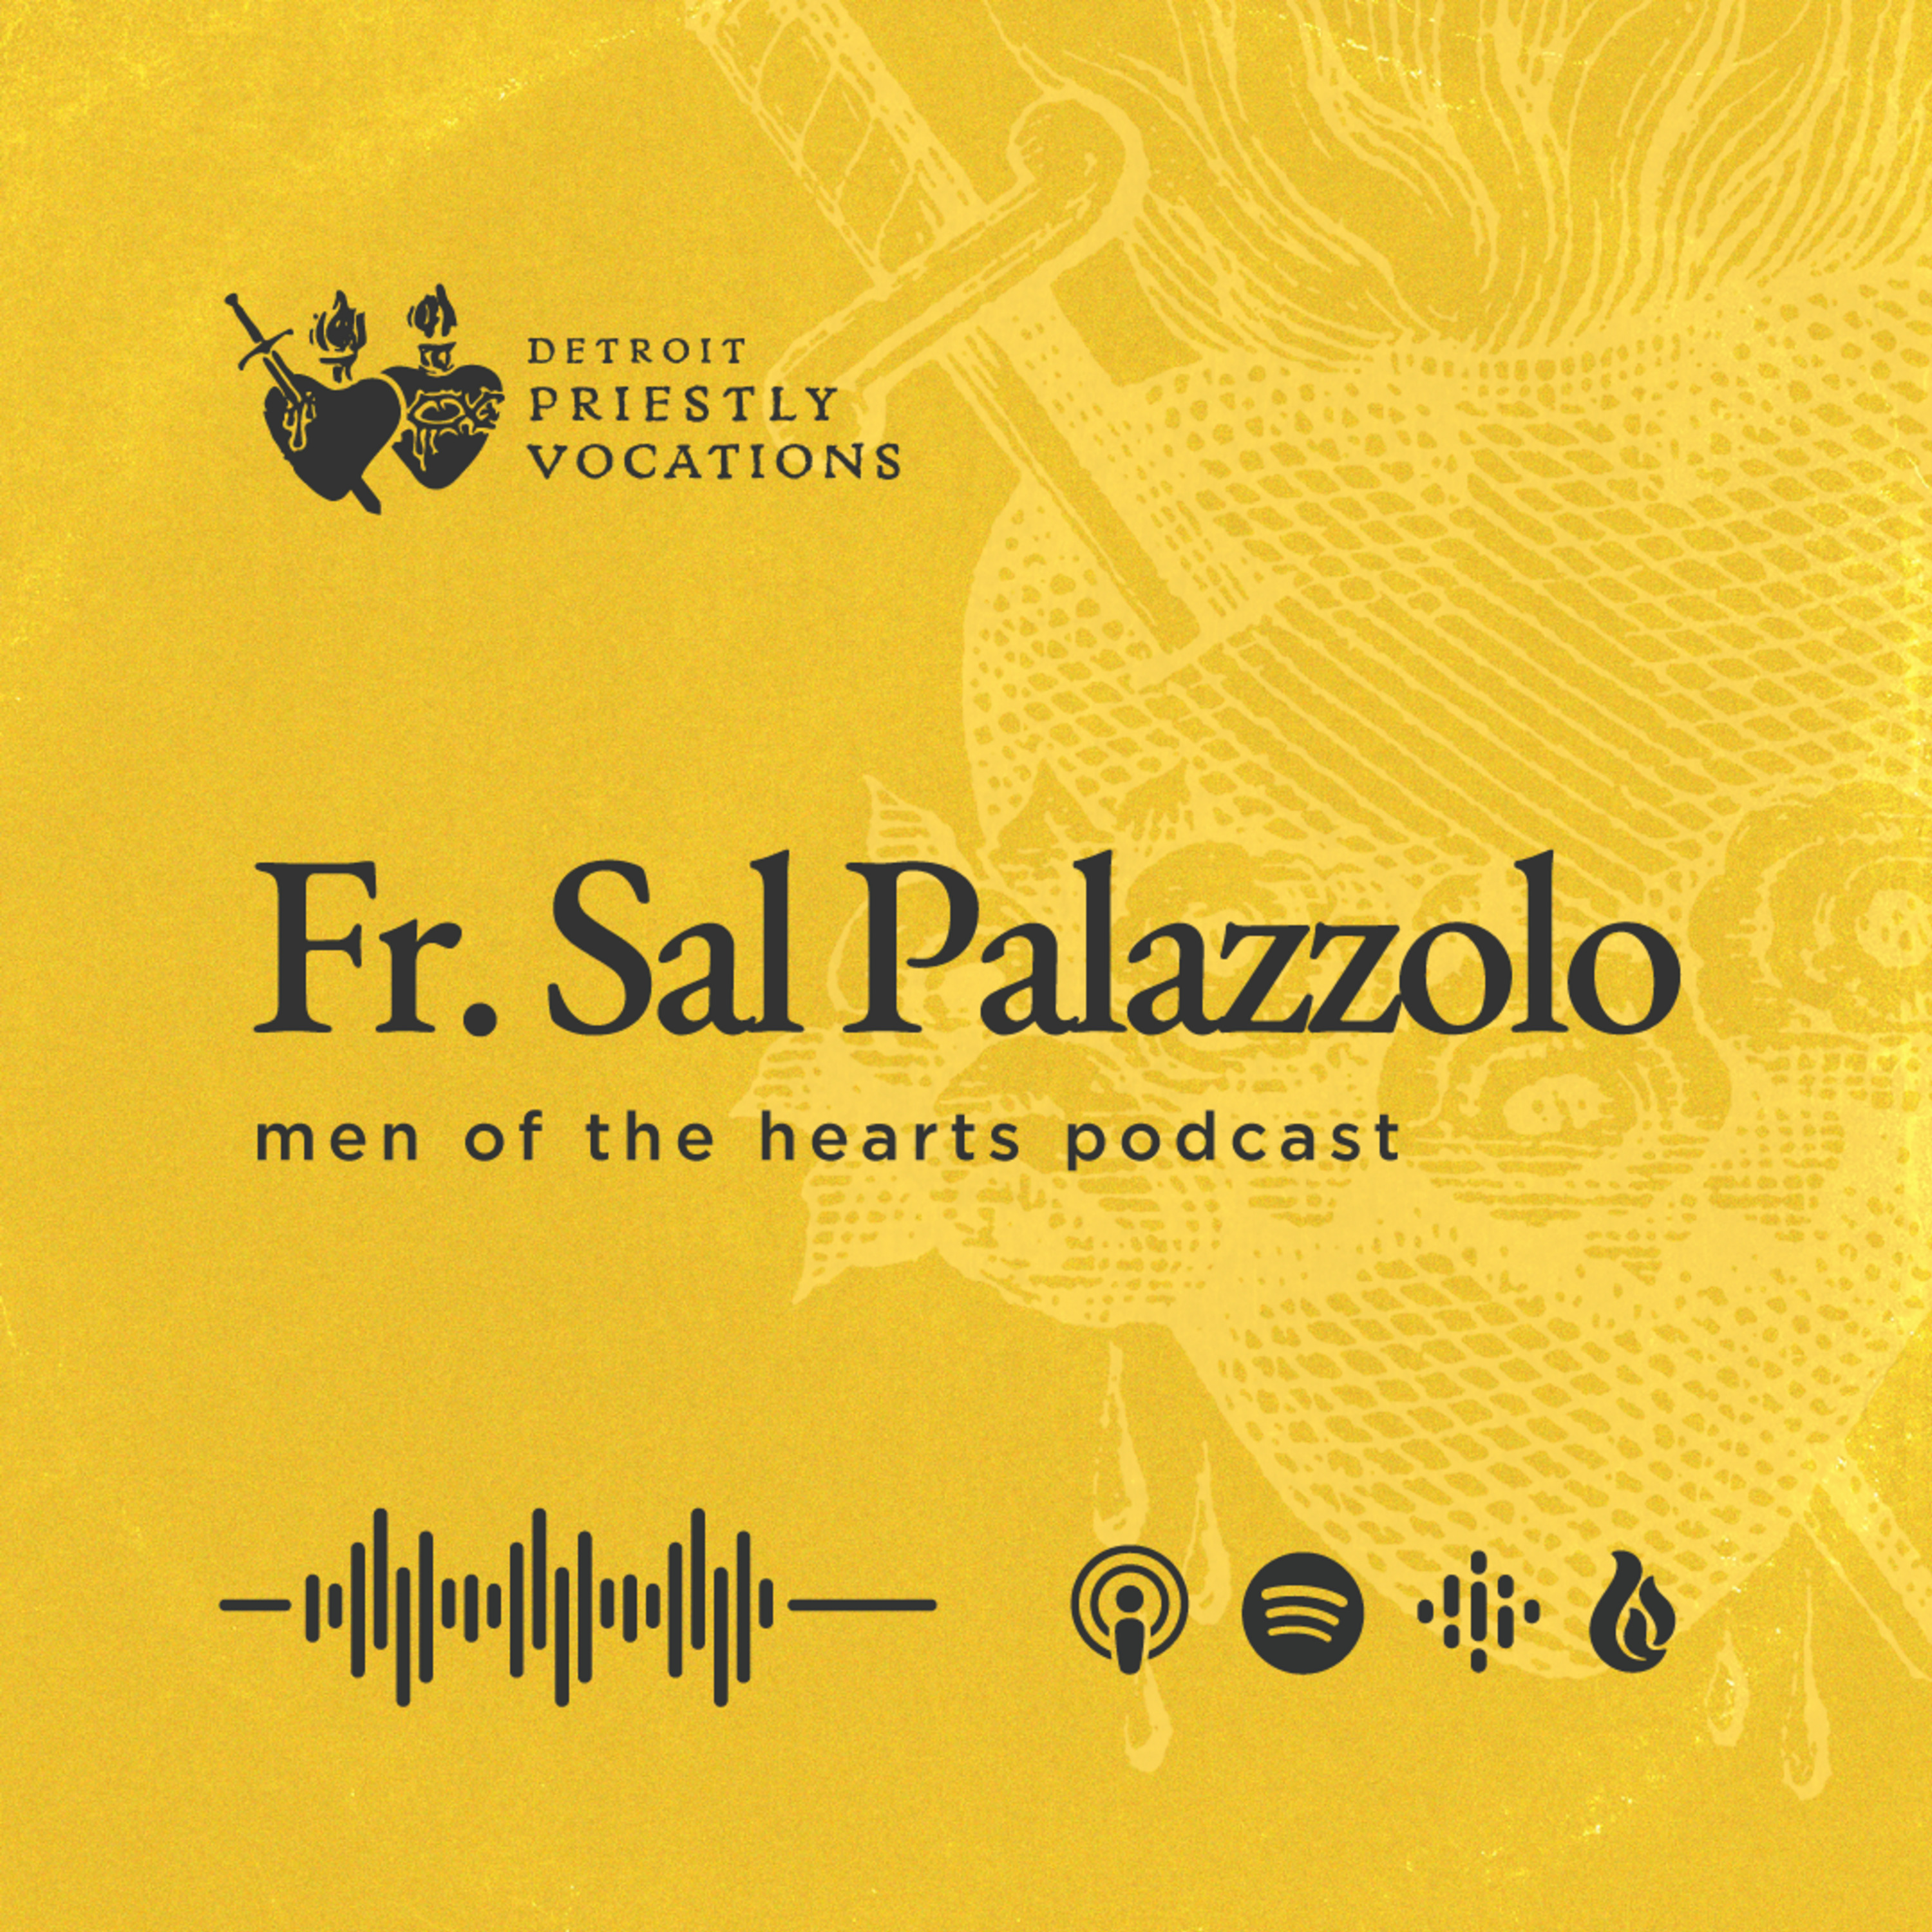 Fr. Salvatore Palazzolo